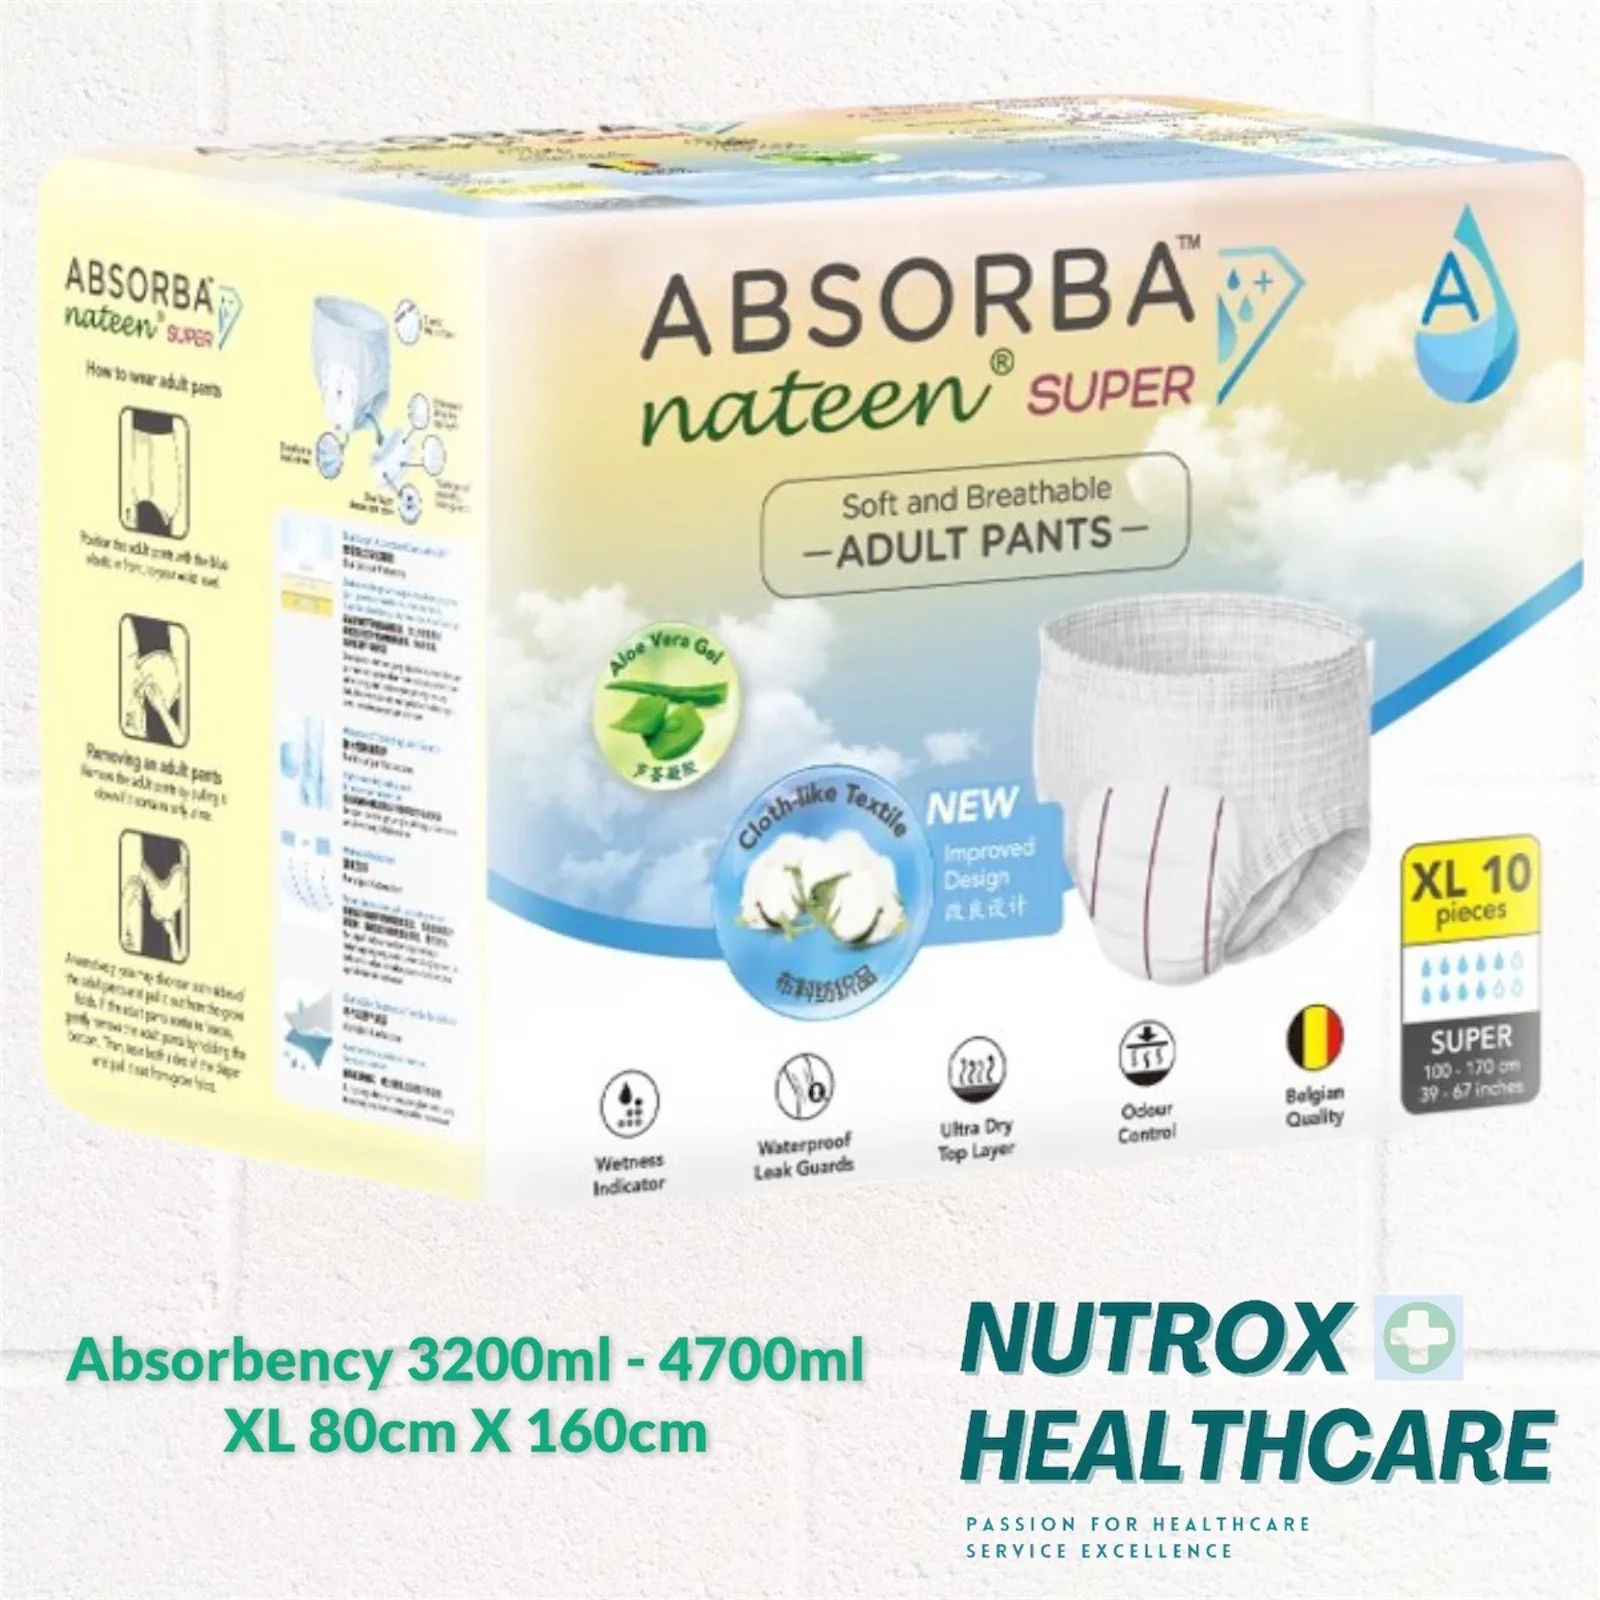 Absorba Nateen SUPER Adult Pull Up Pants XL 10pcs/bag